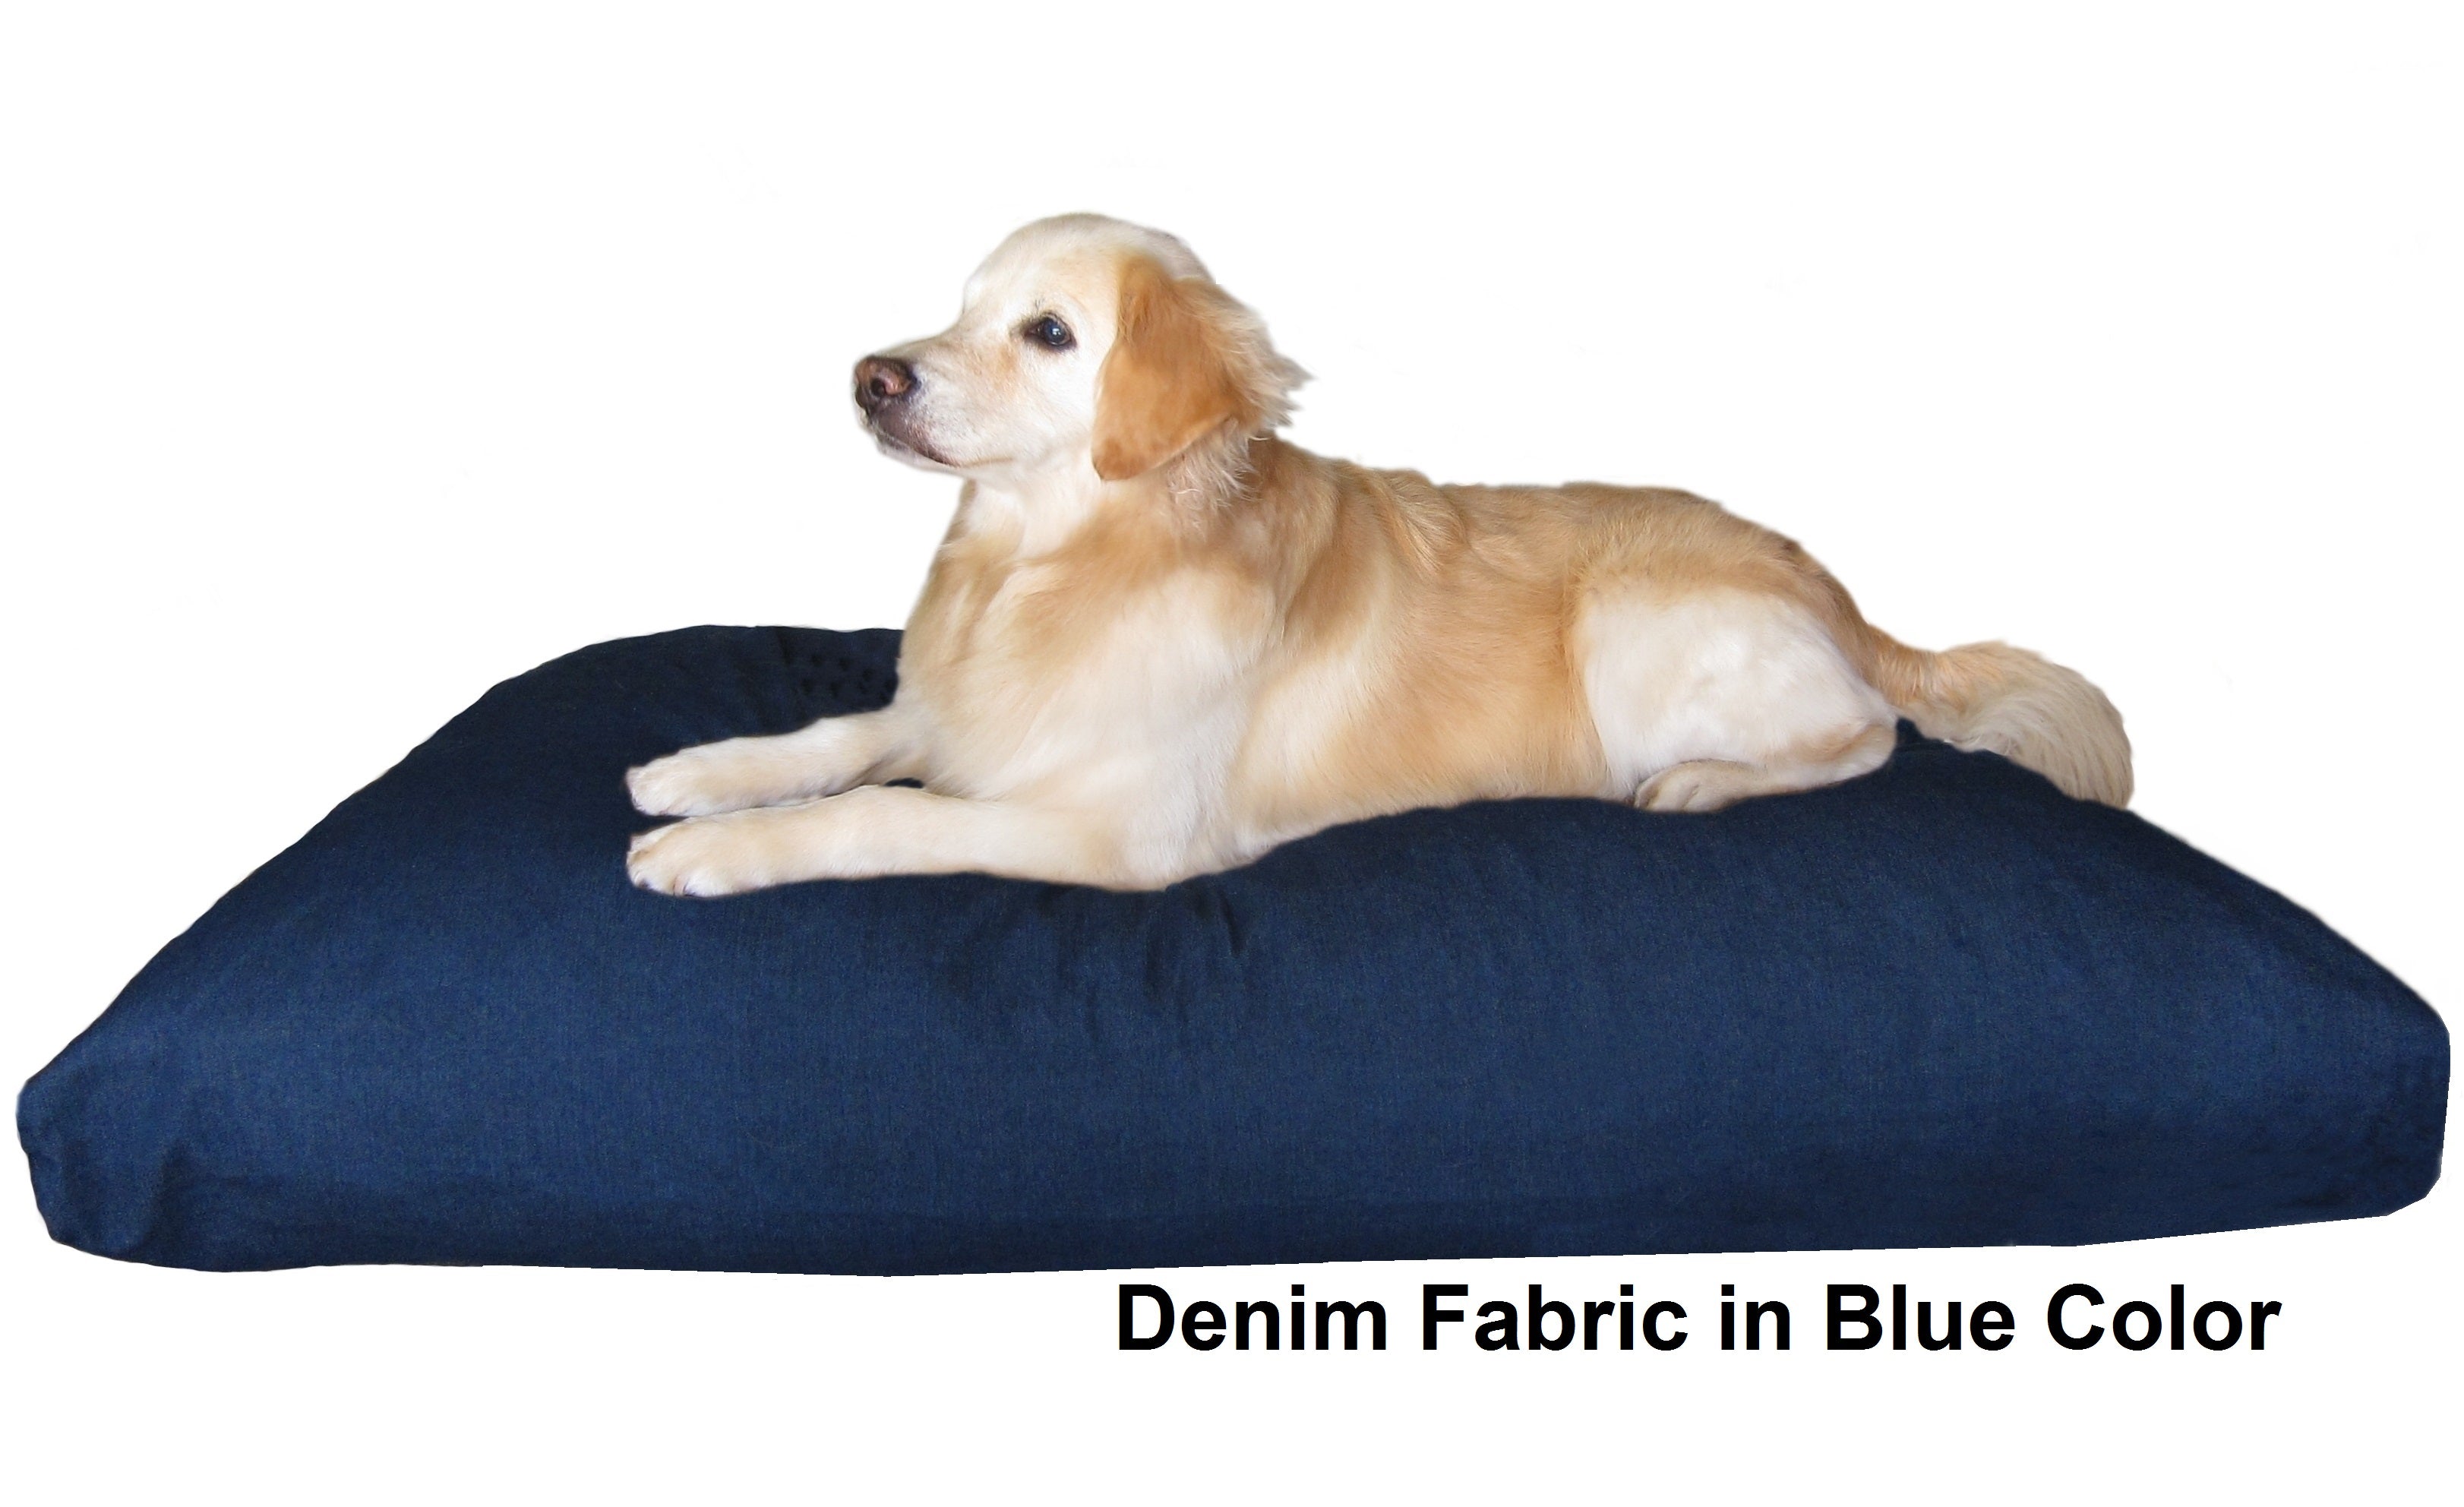 Medium memory foam dog bed